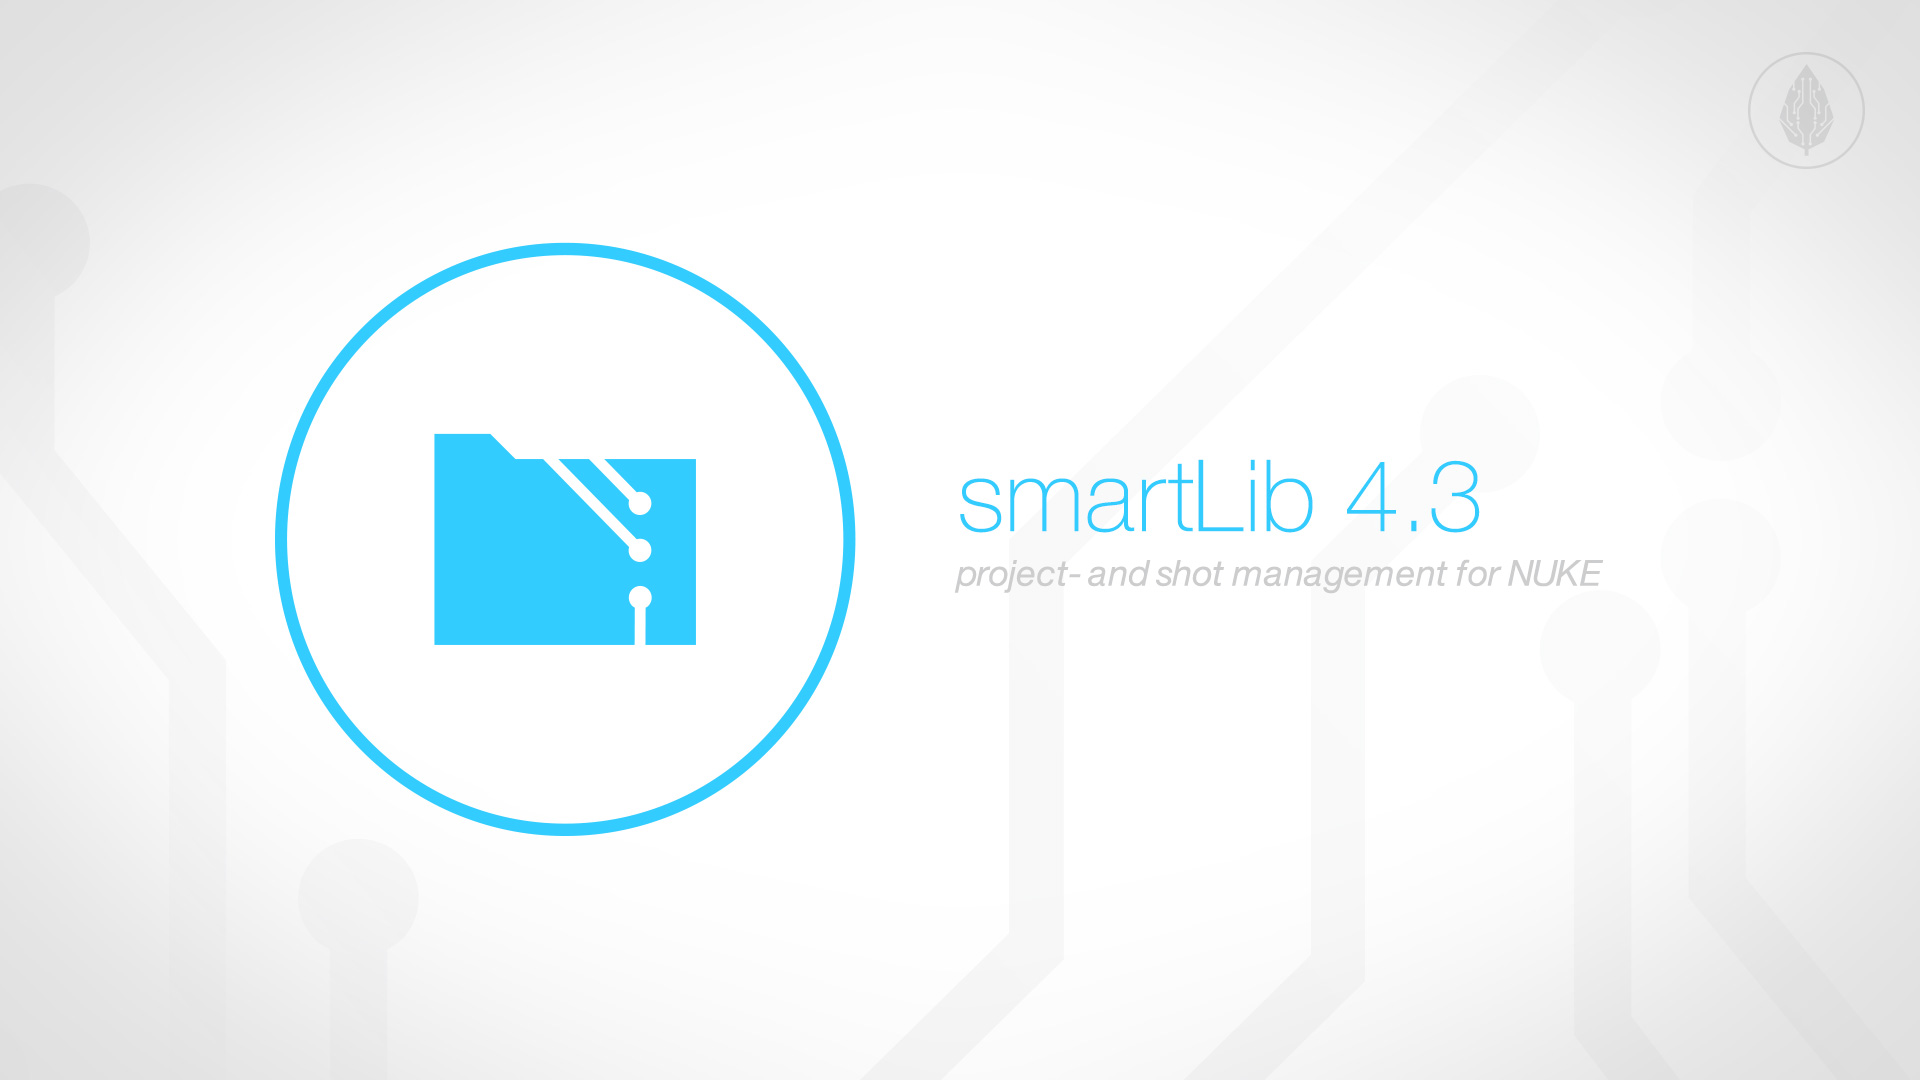 smartLib 4.3